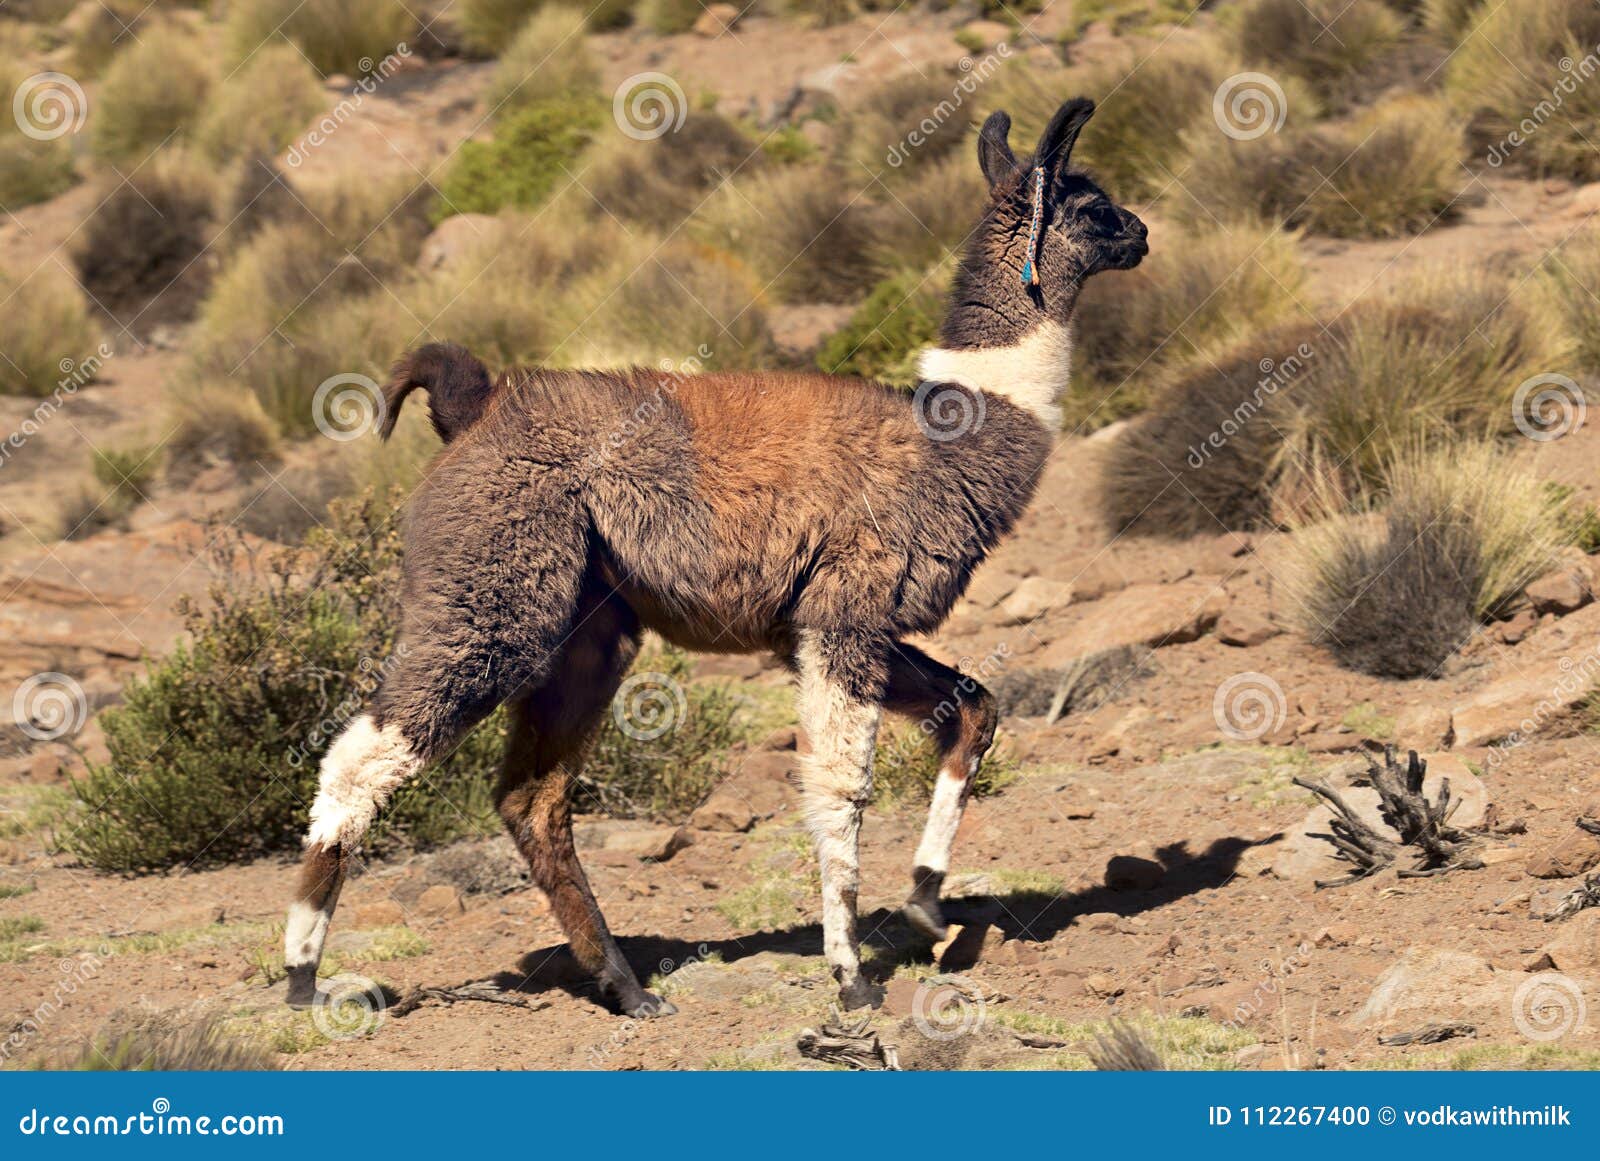 The Llama: National Animal of Bolivia Stock Photo - Image of latino,  tradition: 112267400